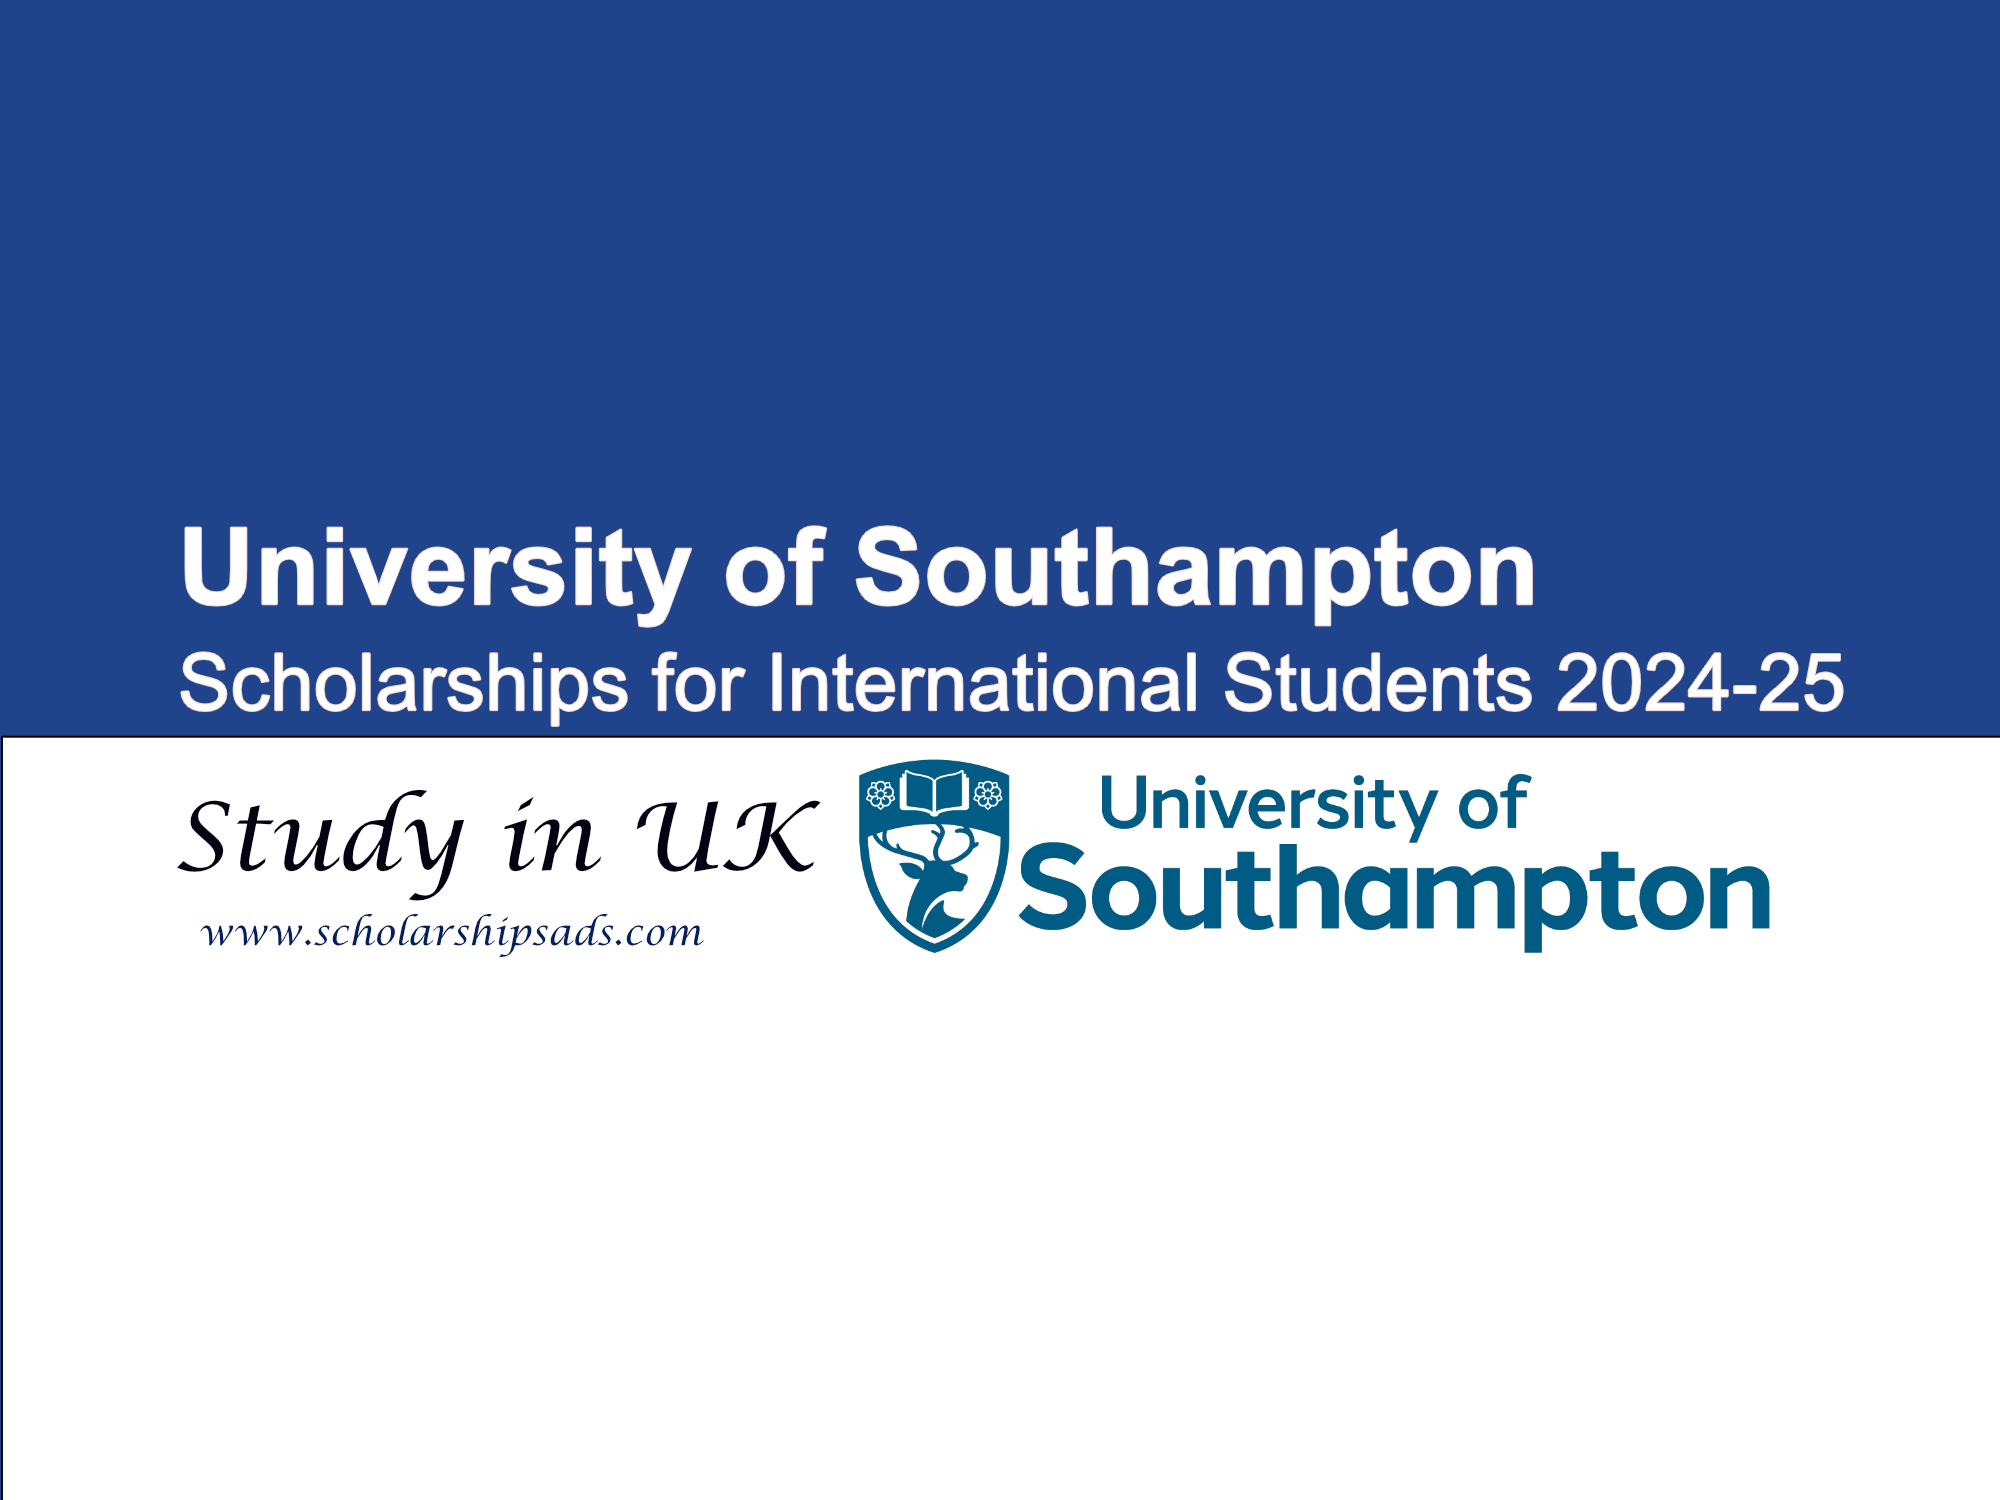 University of Southampton Scholarships for International Students 2024-25, UK.